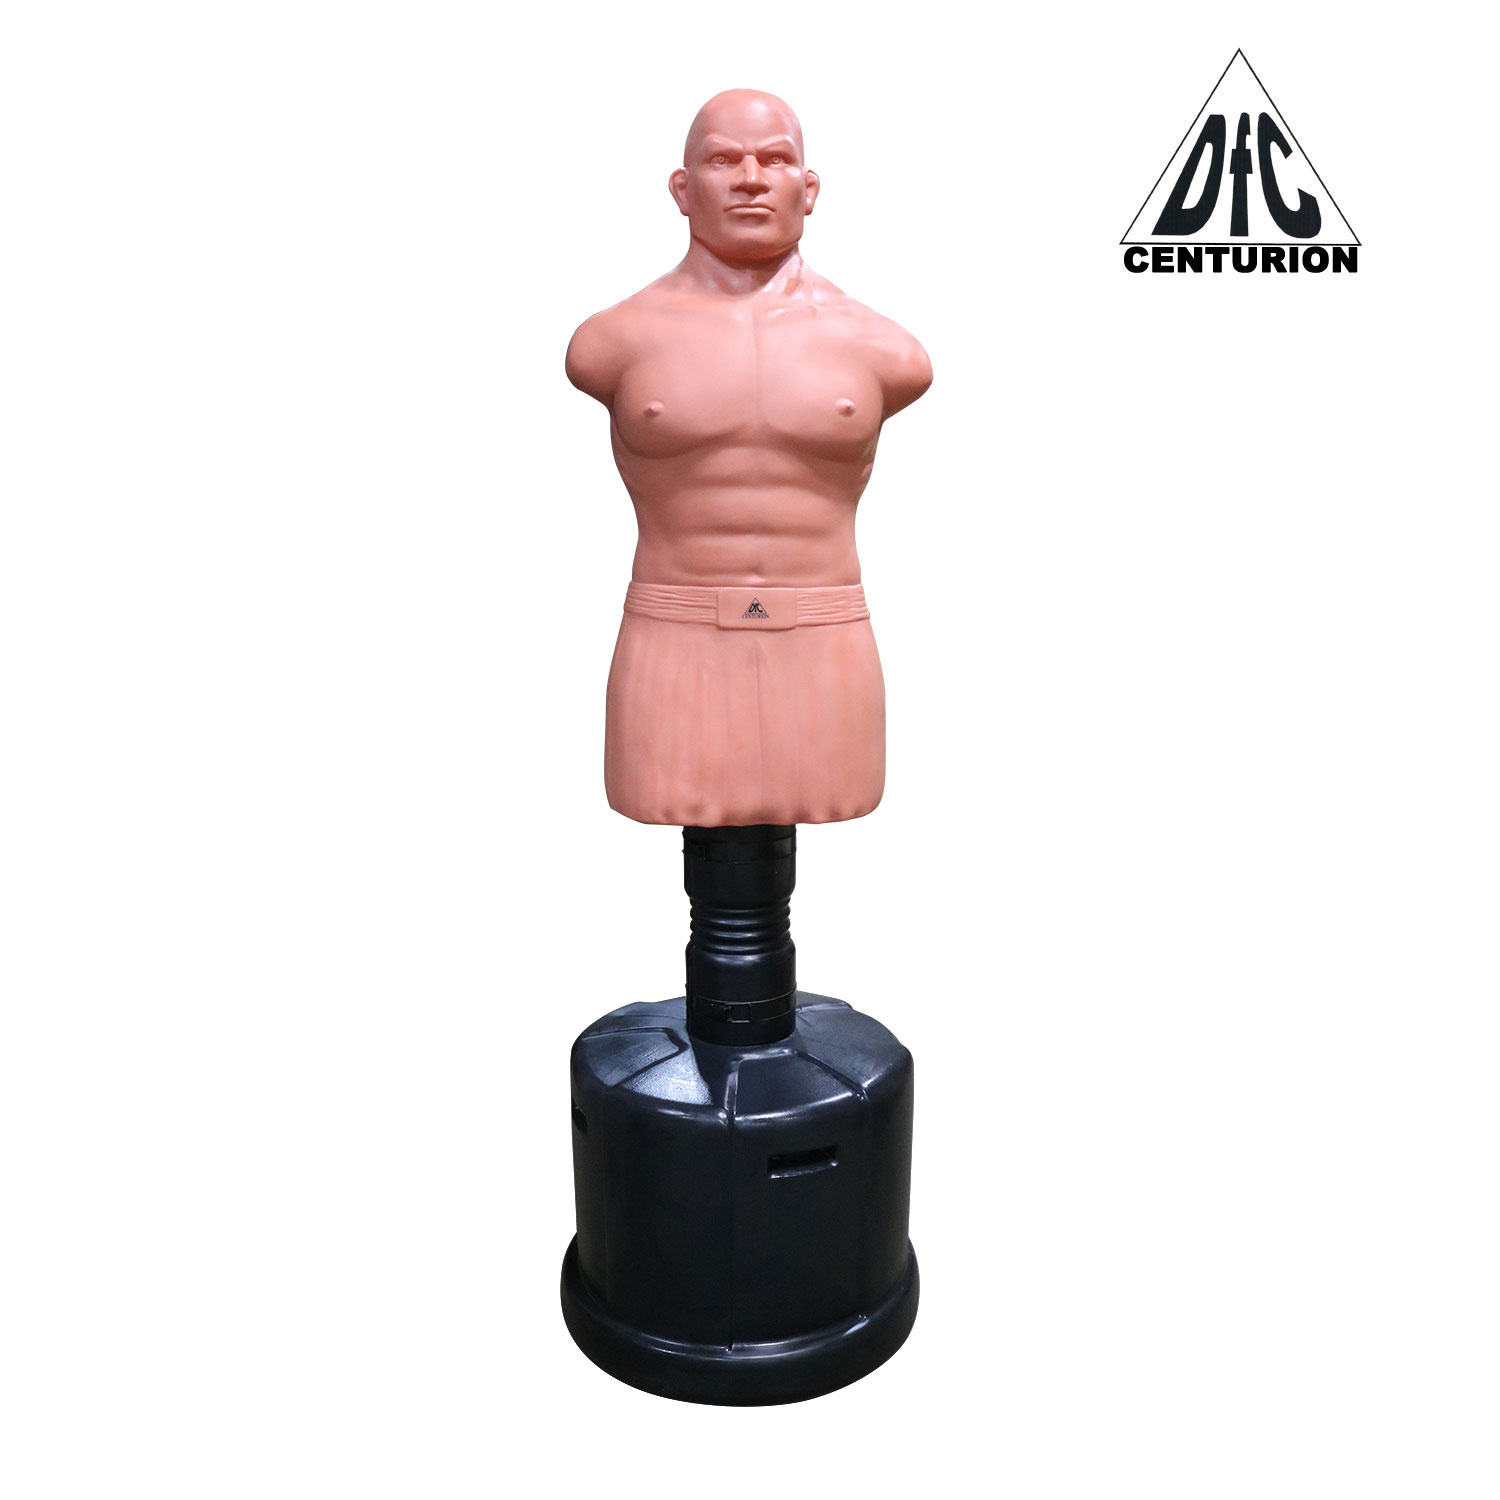 DFC Centurion Boxing Punching Man-Heavy водоналивной - бежевый из каталога манекенов для бокса в Уфе по цене 43990 ₽